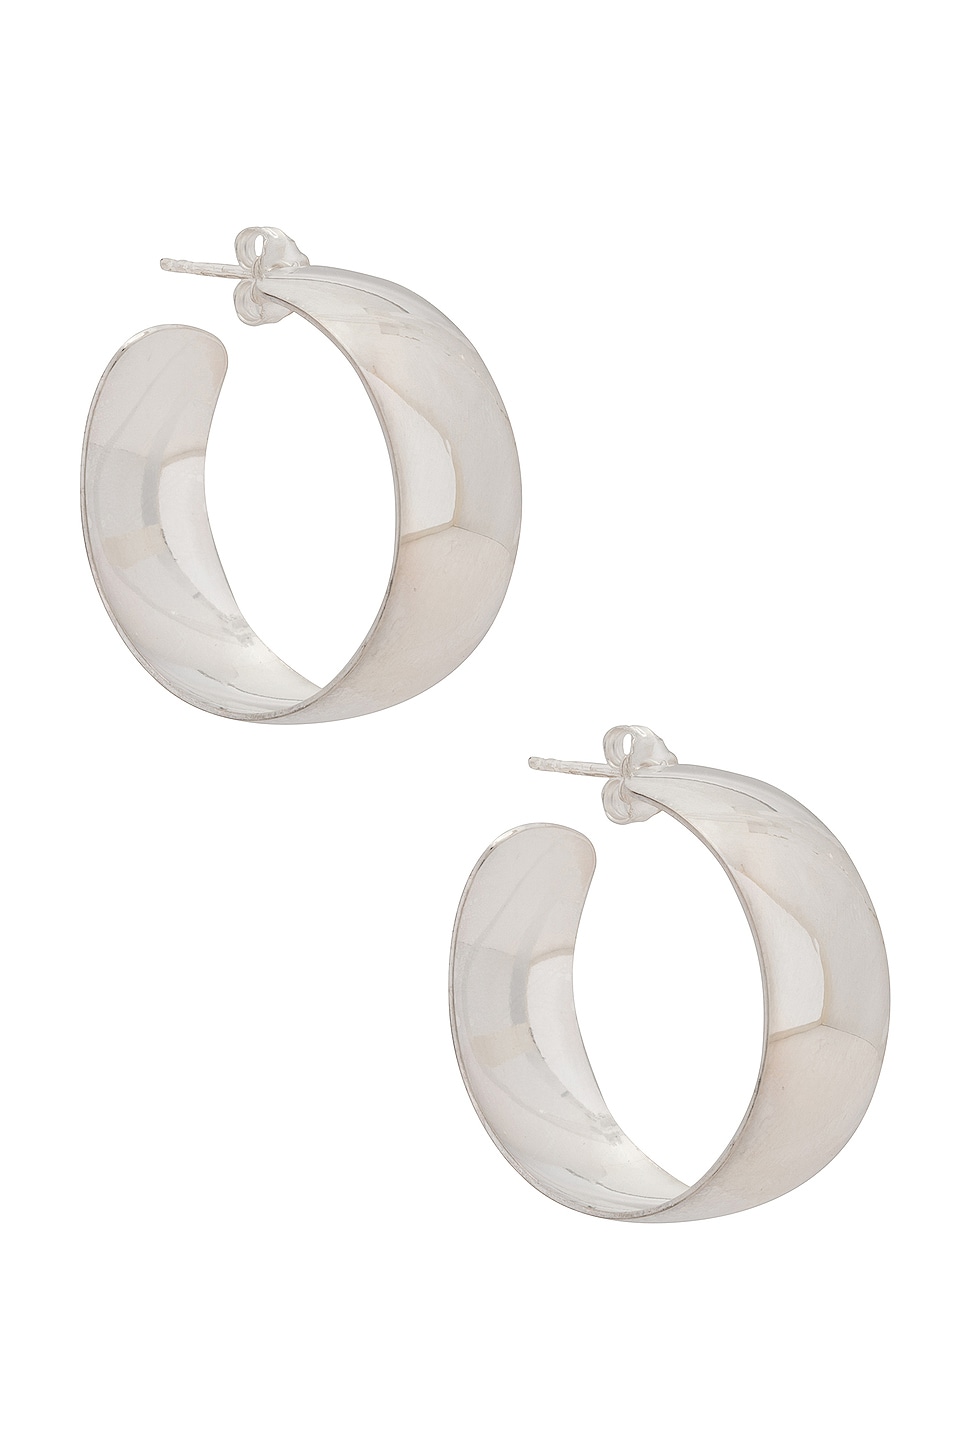 Image 1 of Loren Stewart XL Dome Hoop Earrings in Sterling Silver